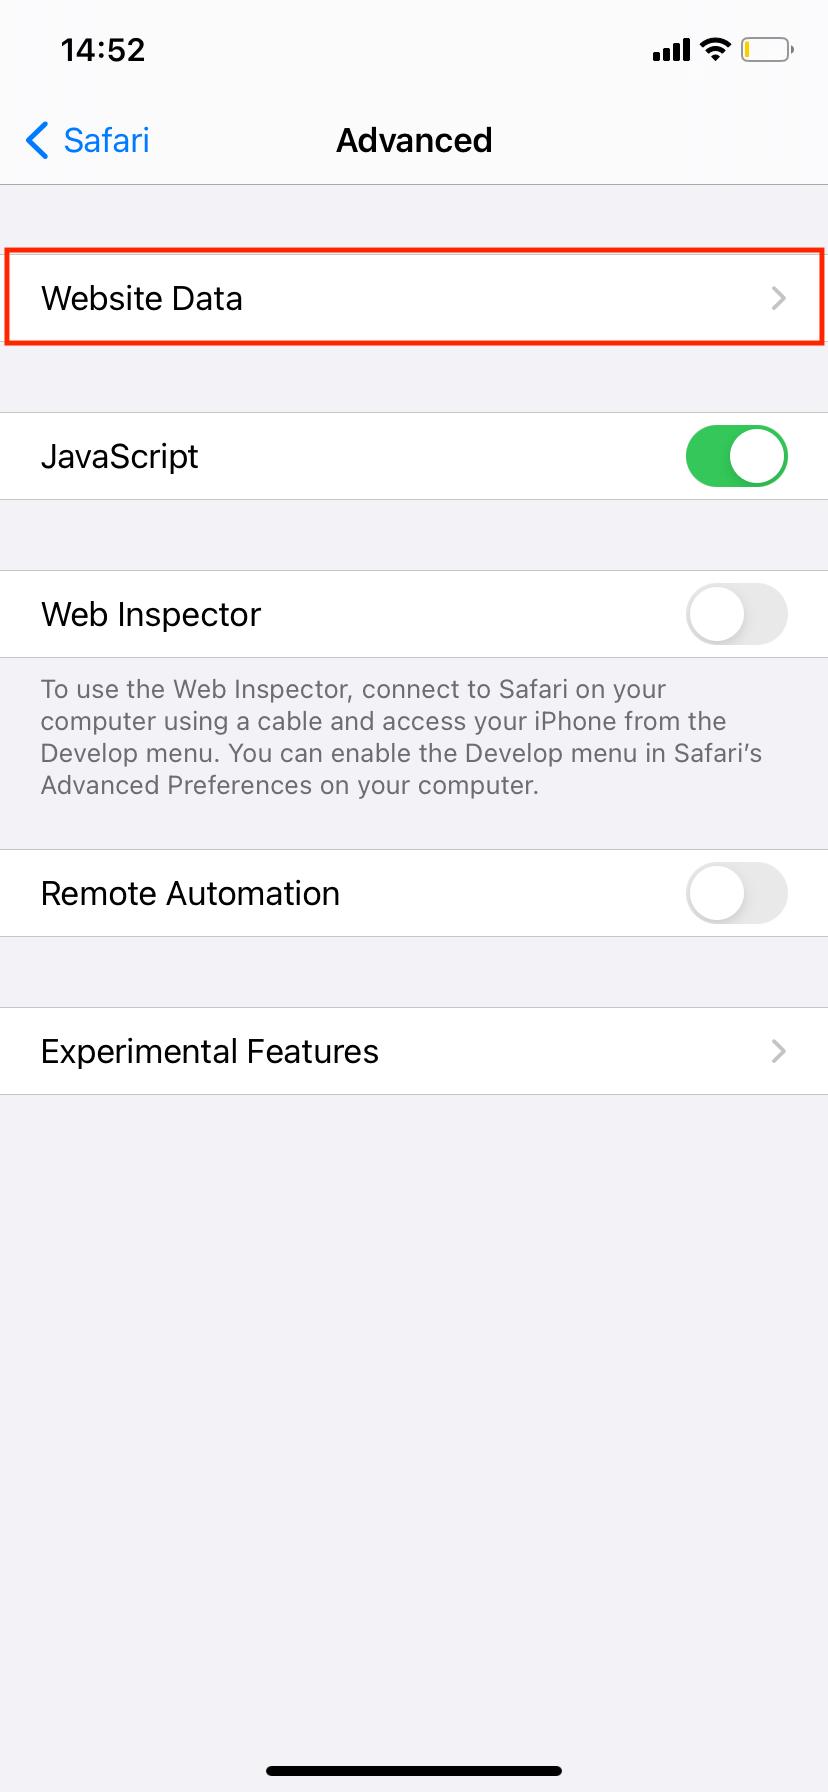 safari website data on iPhone